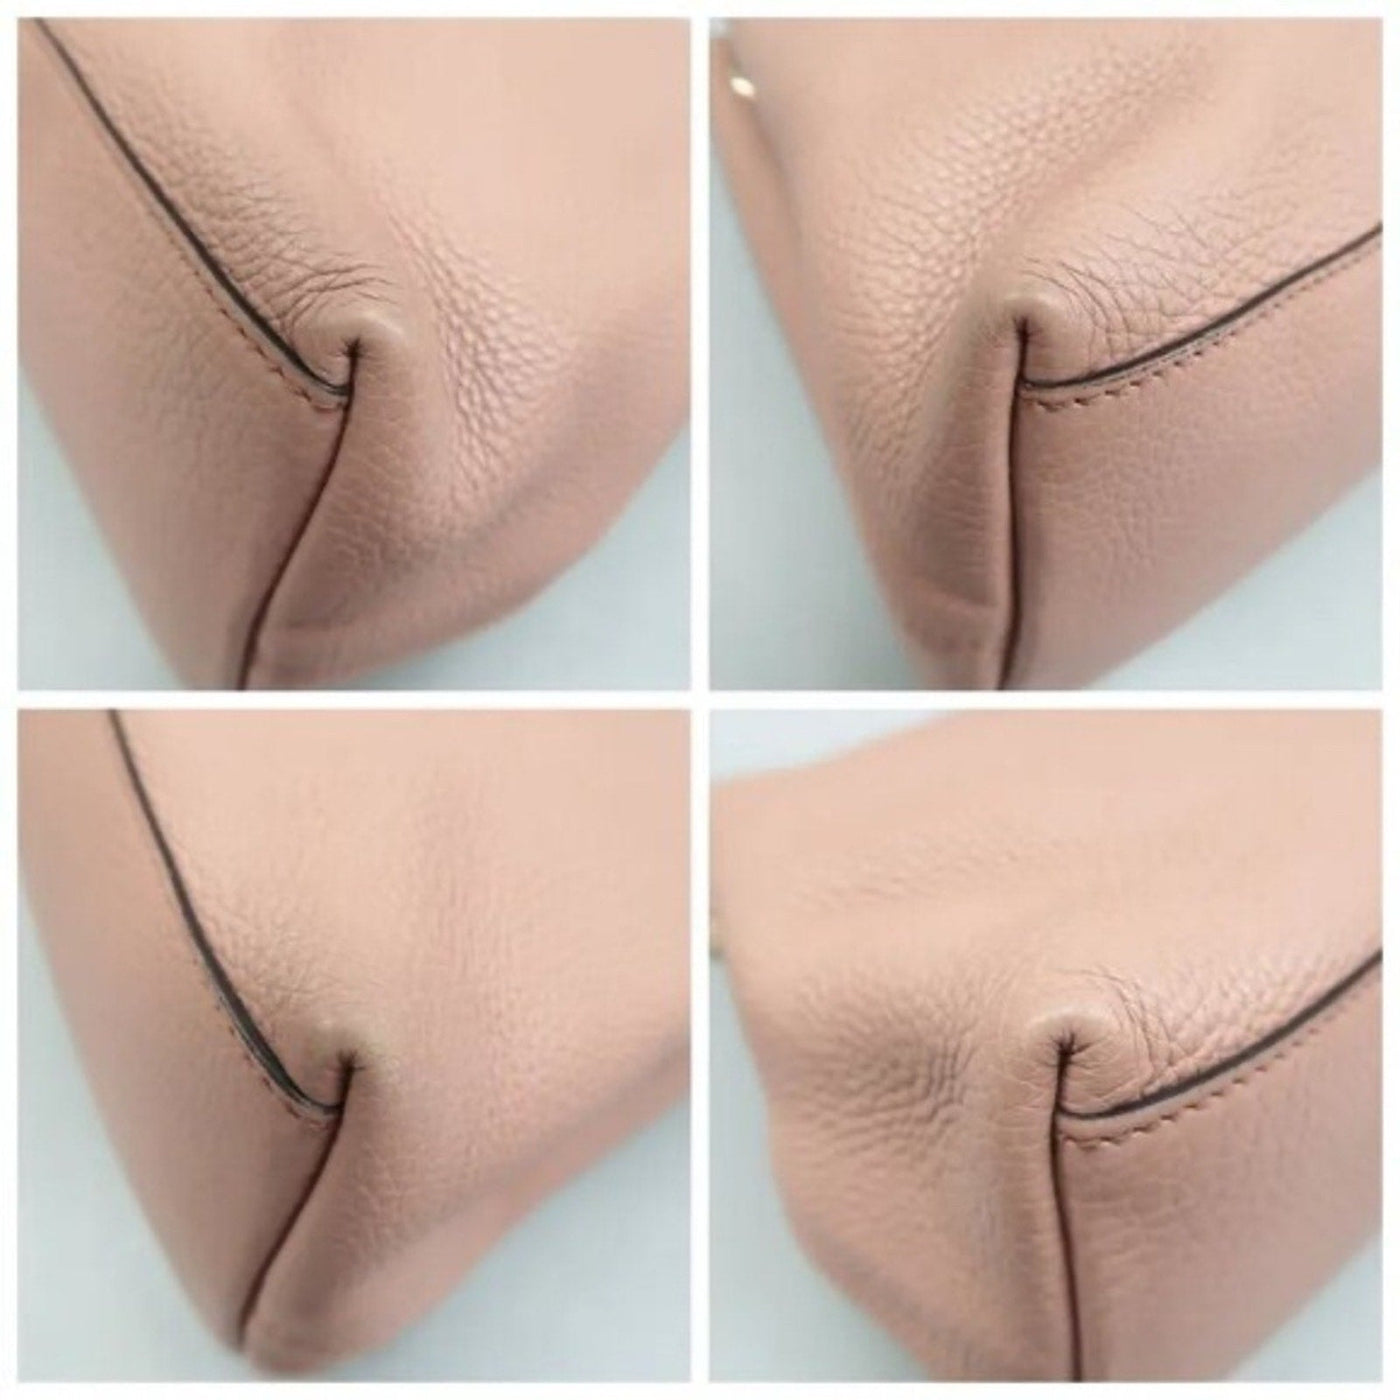 GUCCI Soho Chain Pink Leather Shoulder Bag - Luxury Cheaper LLC